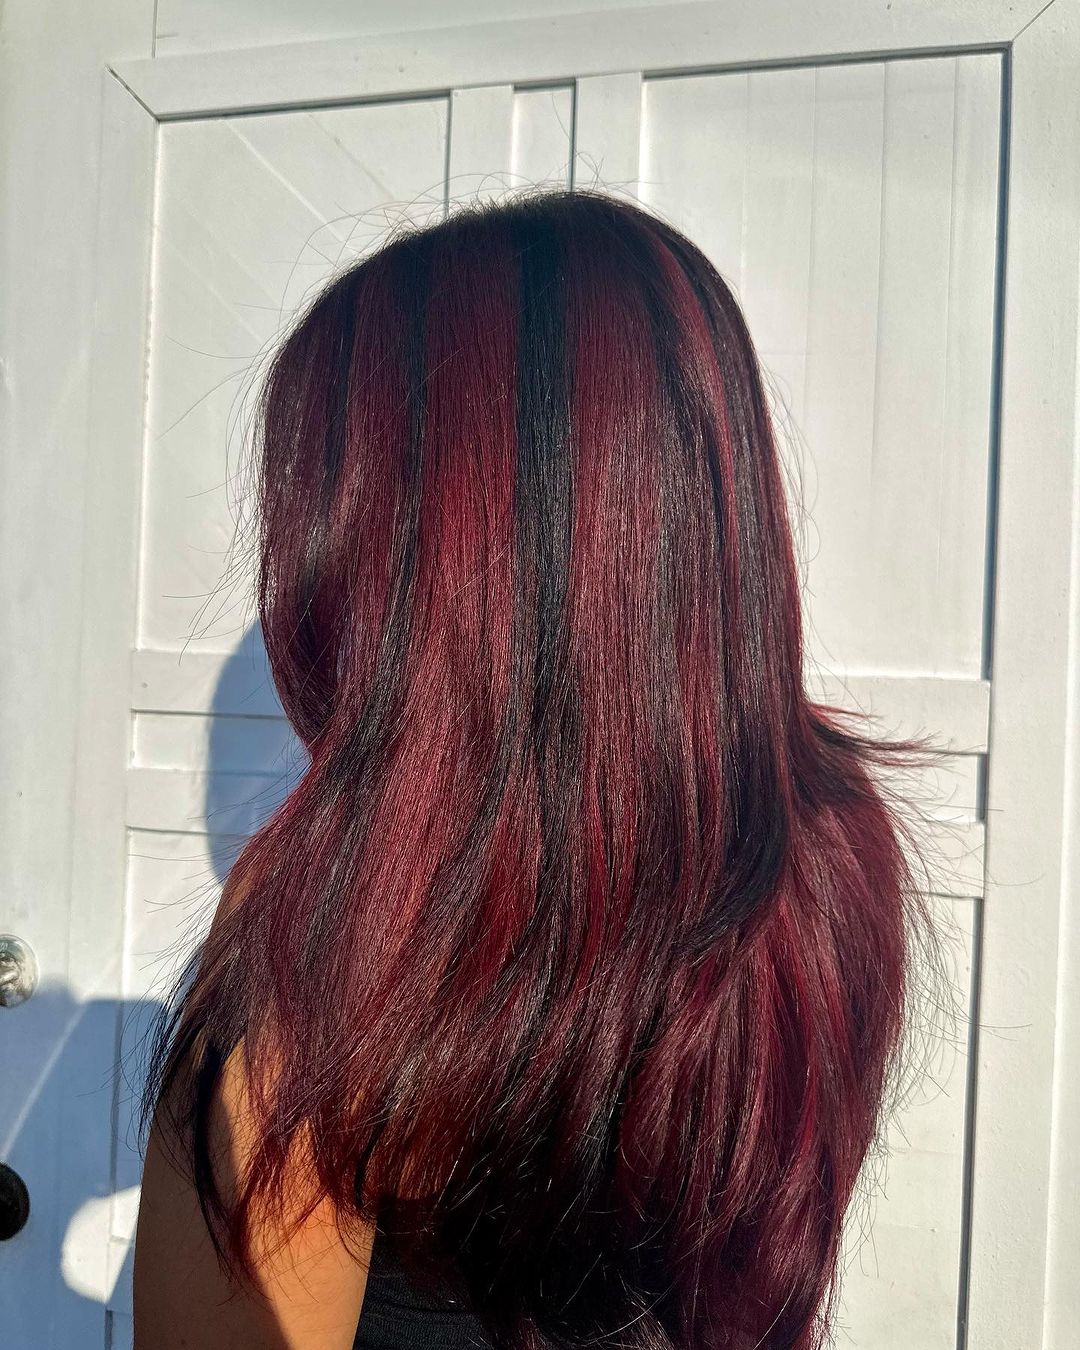 kastanjebruine rode highlights op zwart haar